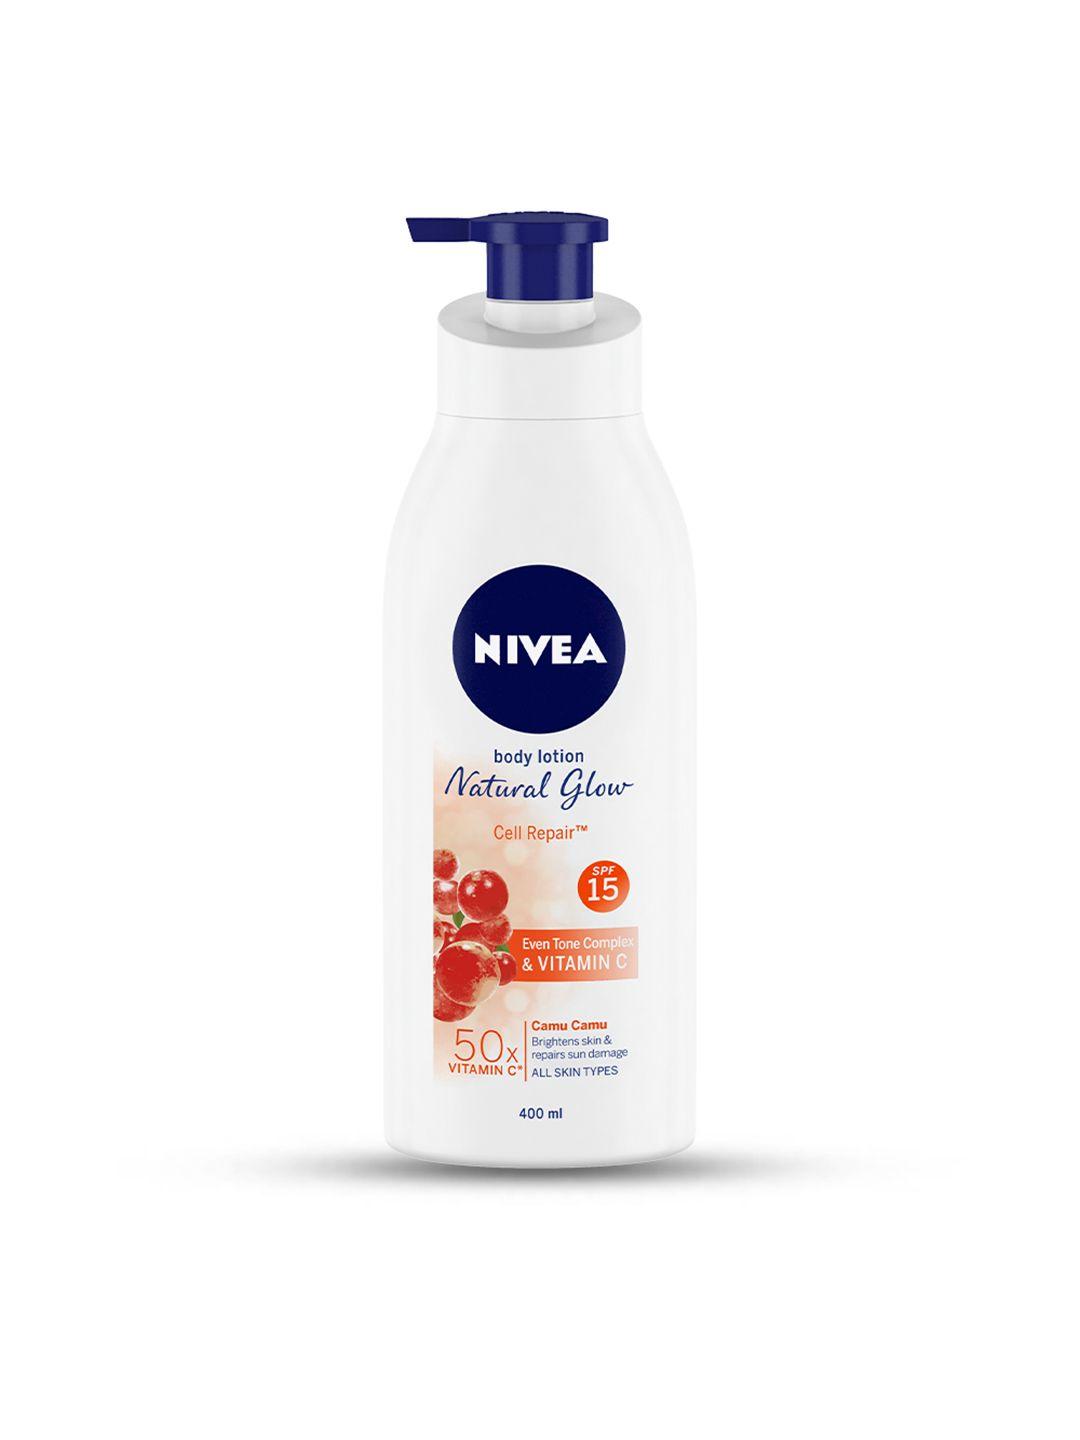 nivea-body-lotion-spf-15-natural-glow-cell-repair-50x-vitamin-c---400-ml